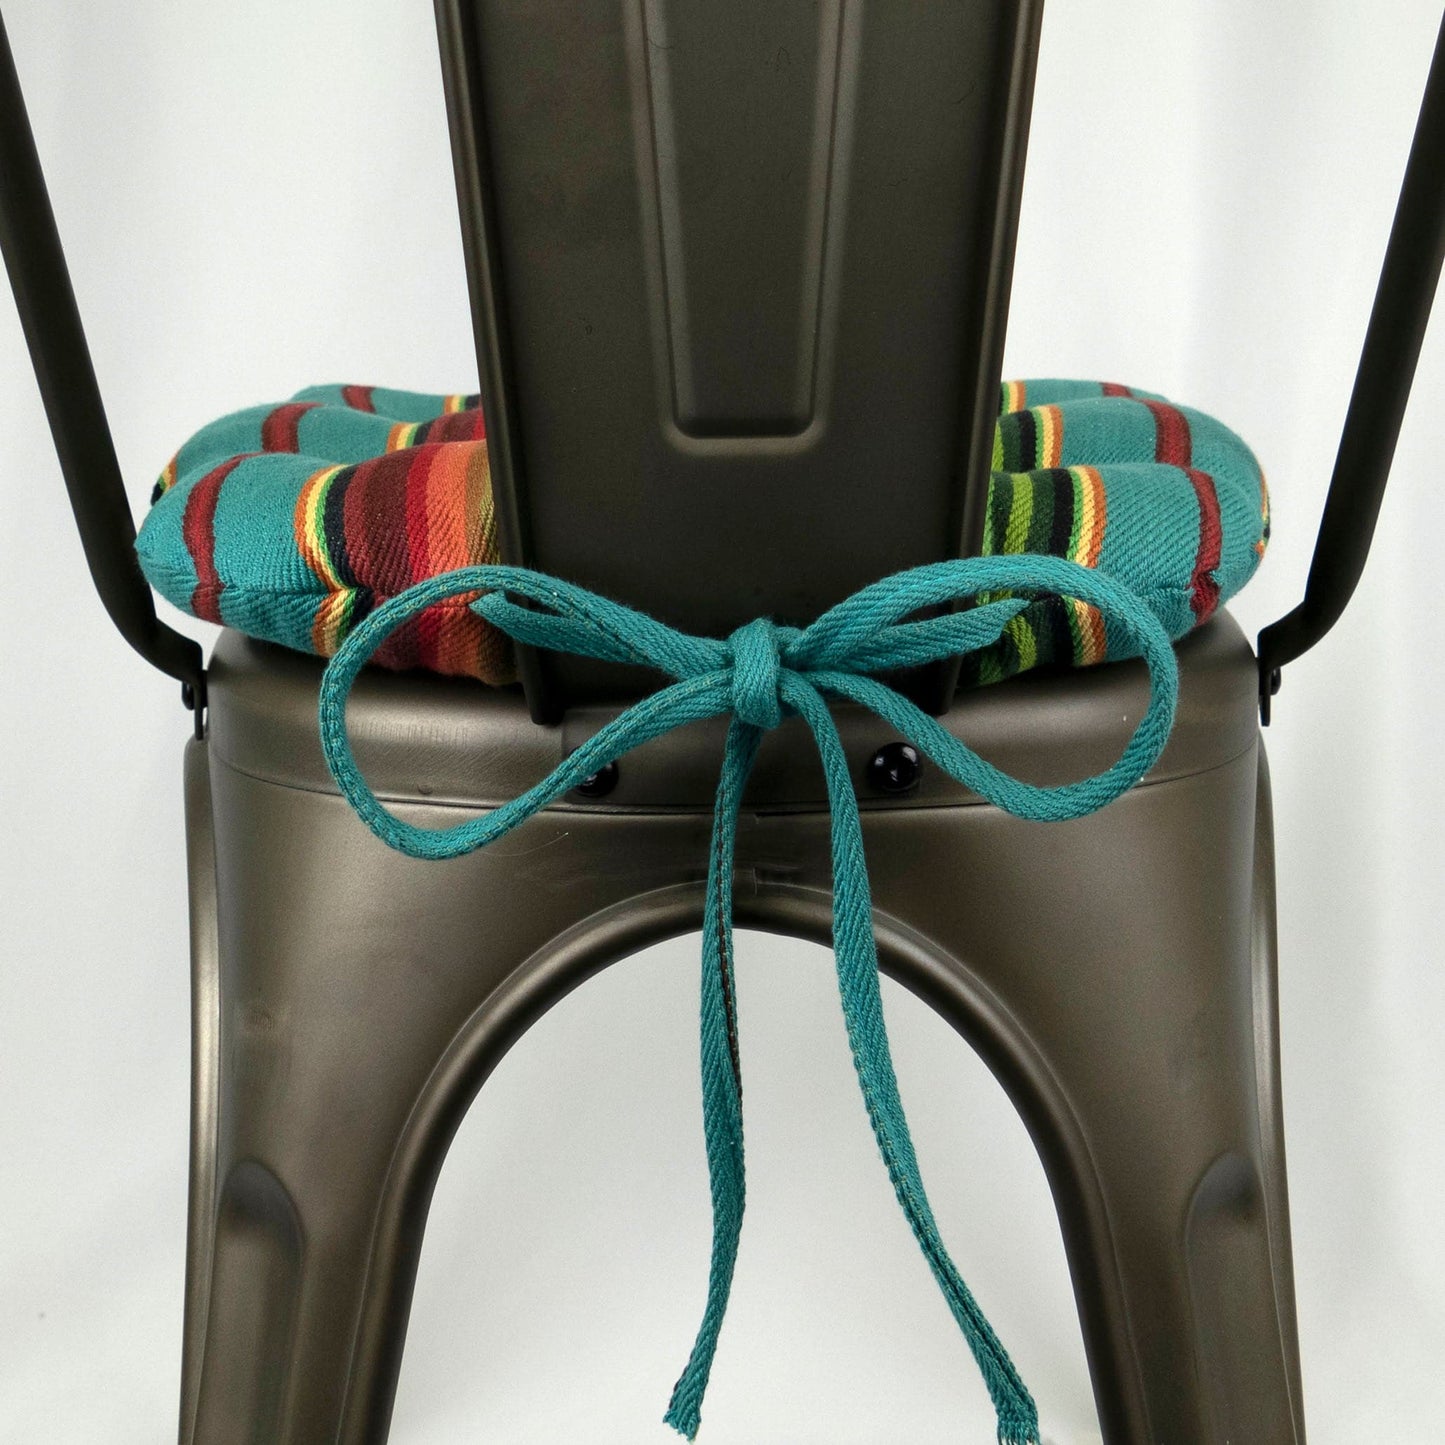 Santa Fe Serape Stripe Industrial Chair Cushion - Latex Foam Fill - Barnett Home Decor - Teal, Green, Red, Yellow, & Copper